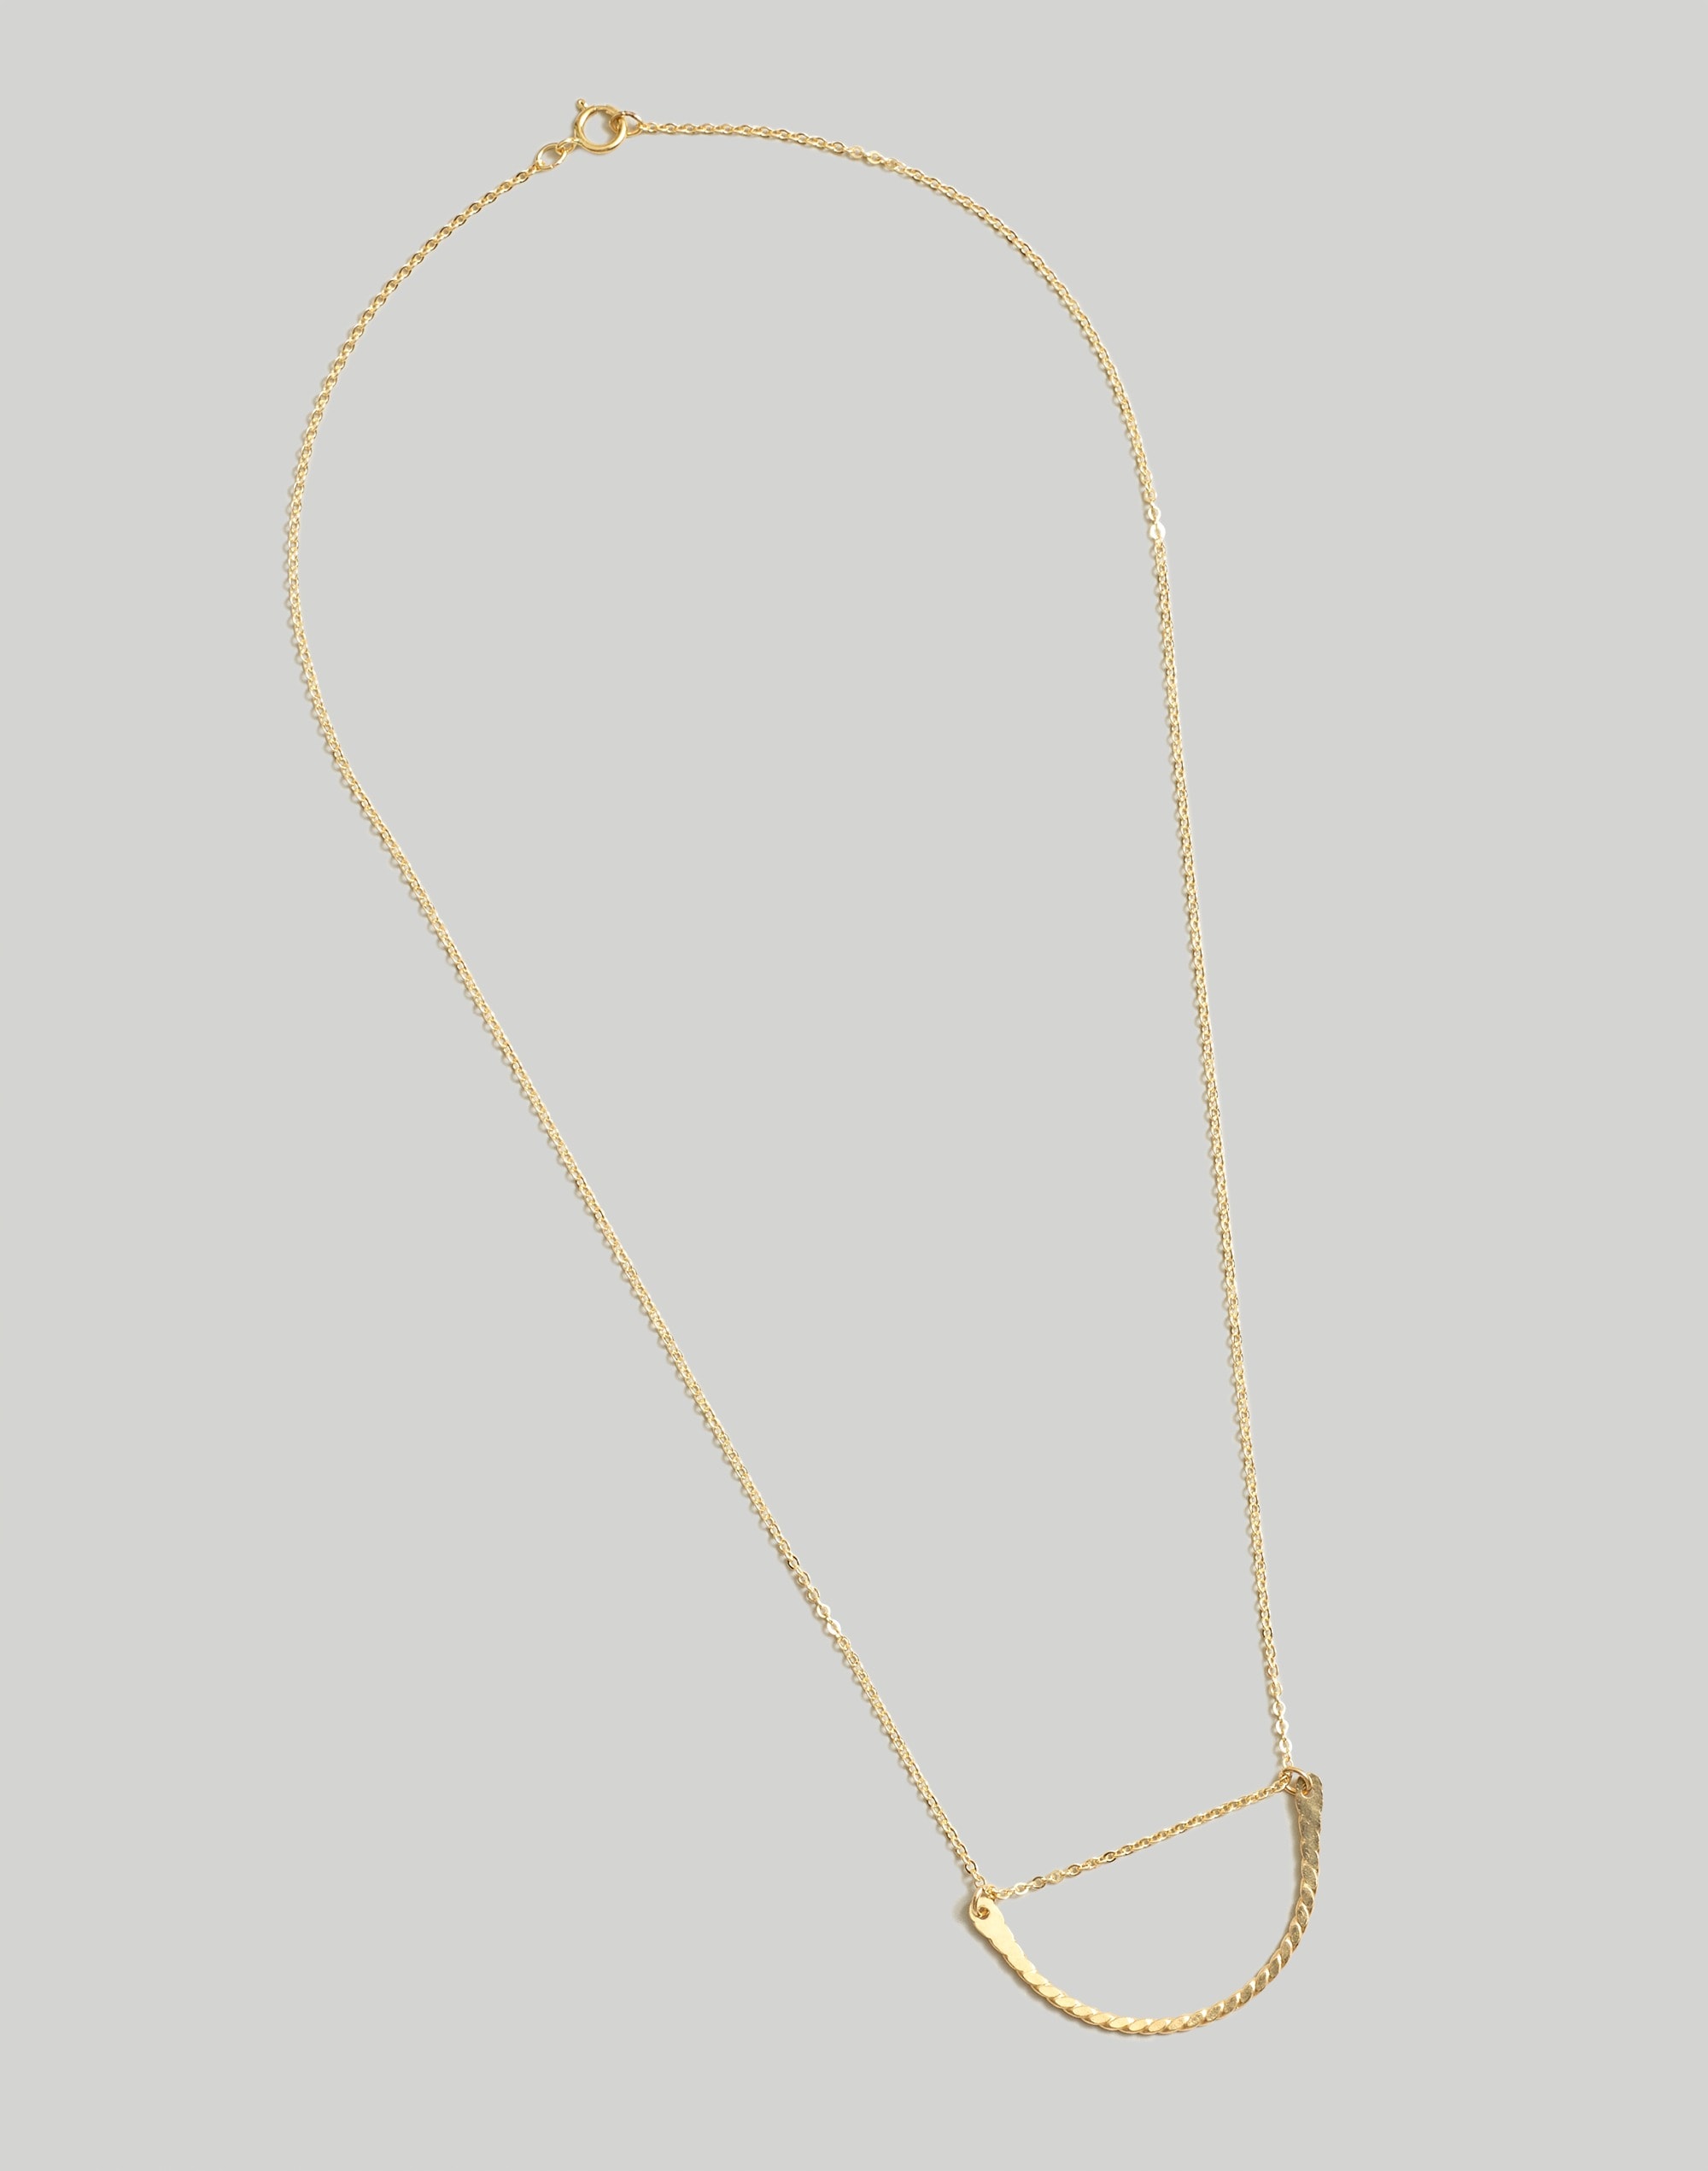 In Situ Jewelry 14k Gold-Filled Serena Necklace